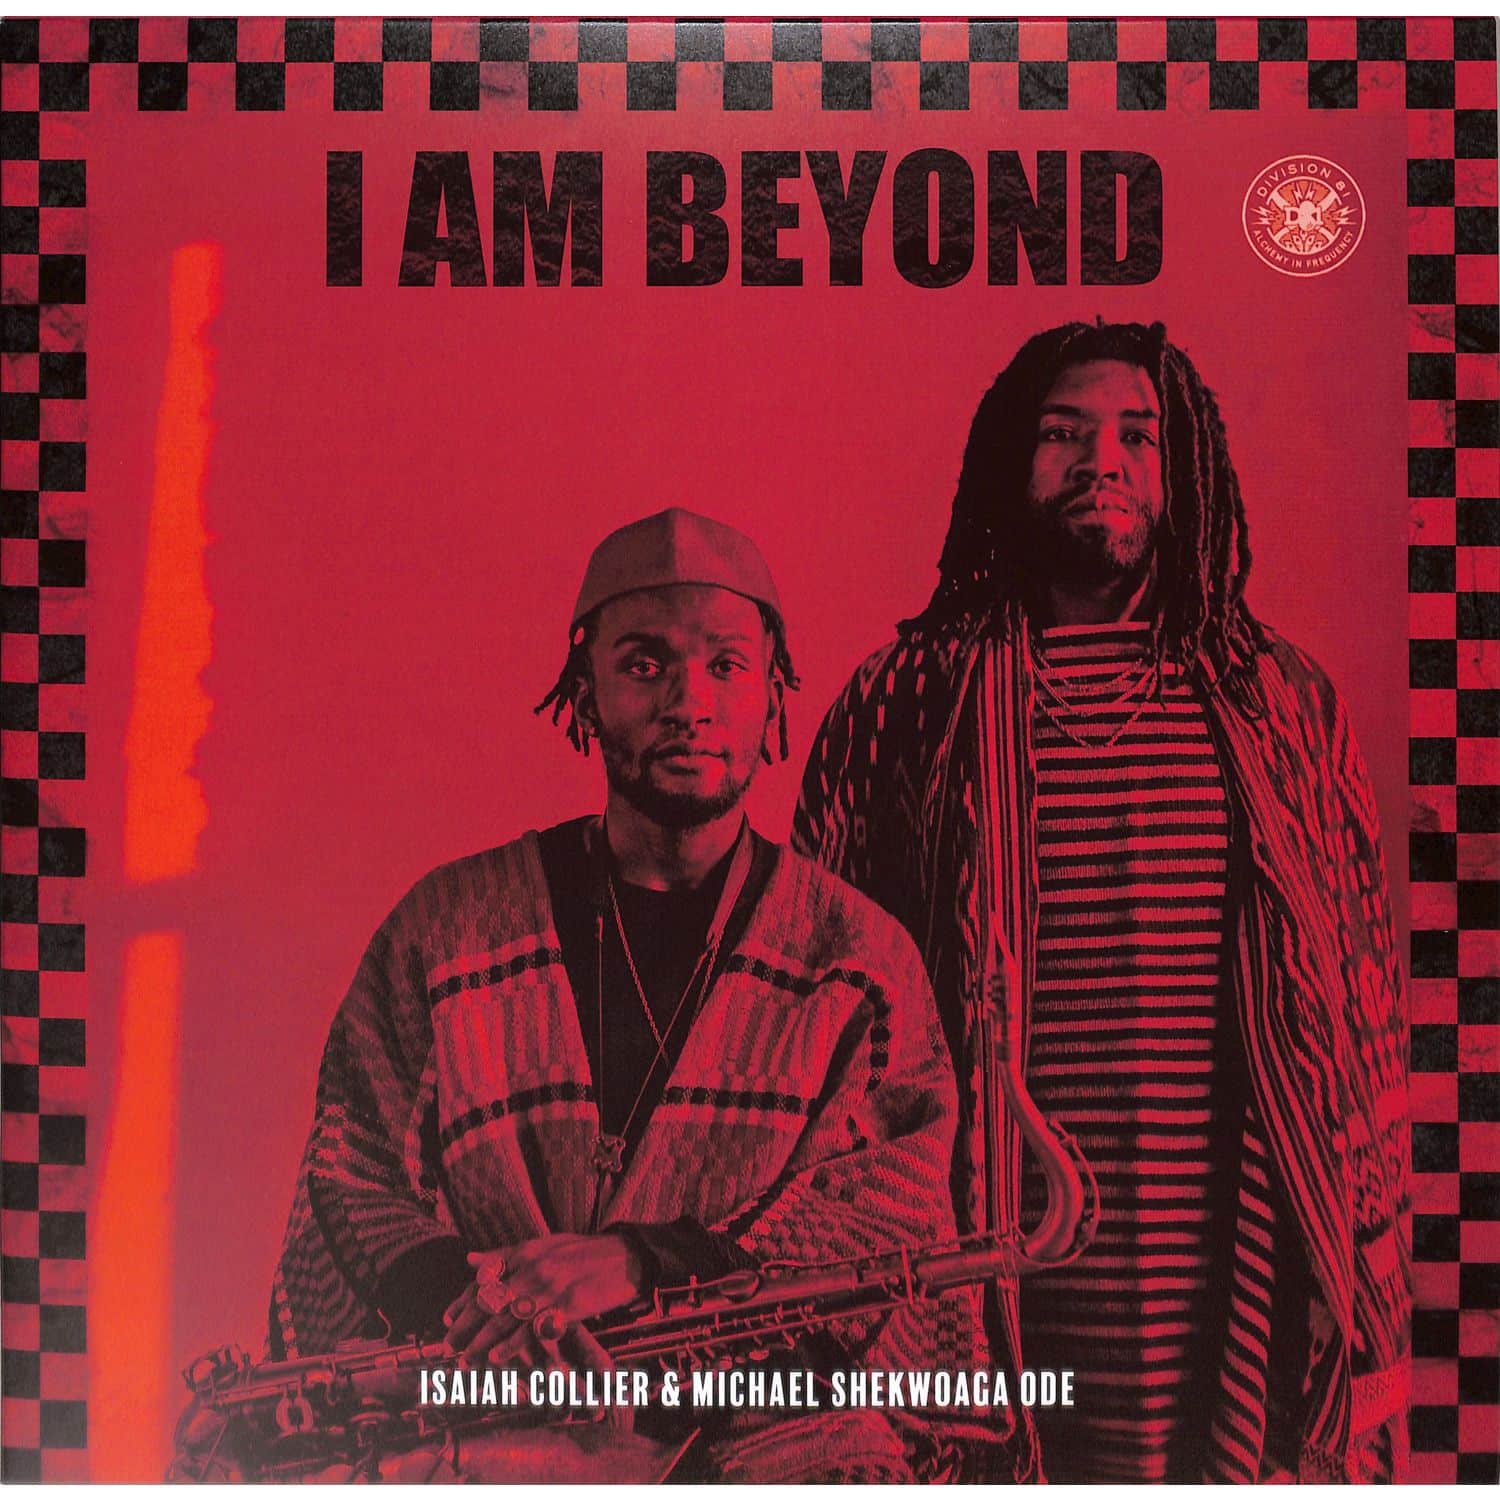 Isaiah Collier & Michael Shekwoaga Ode - I AM BEYOND 